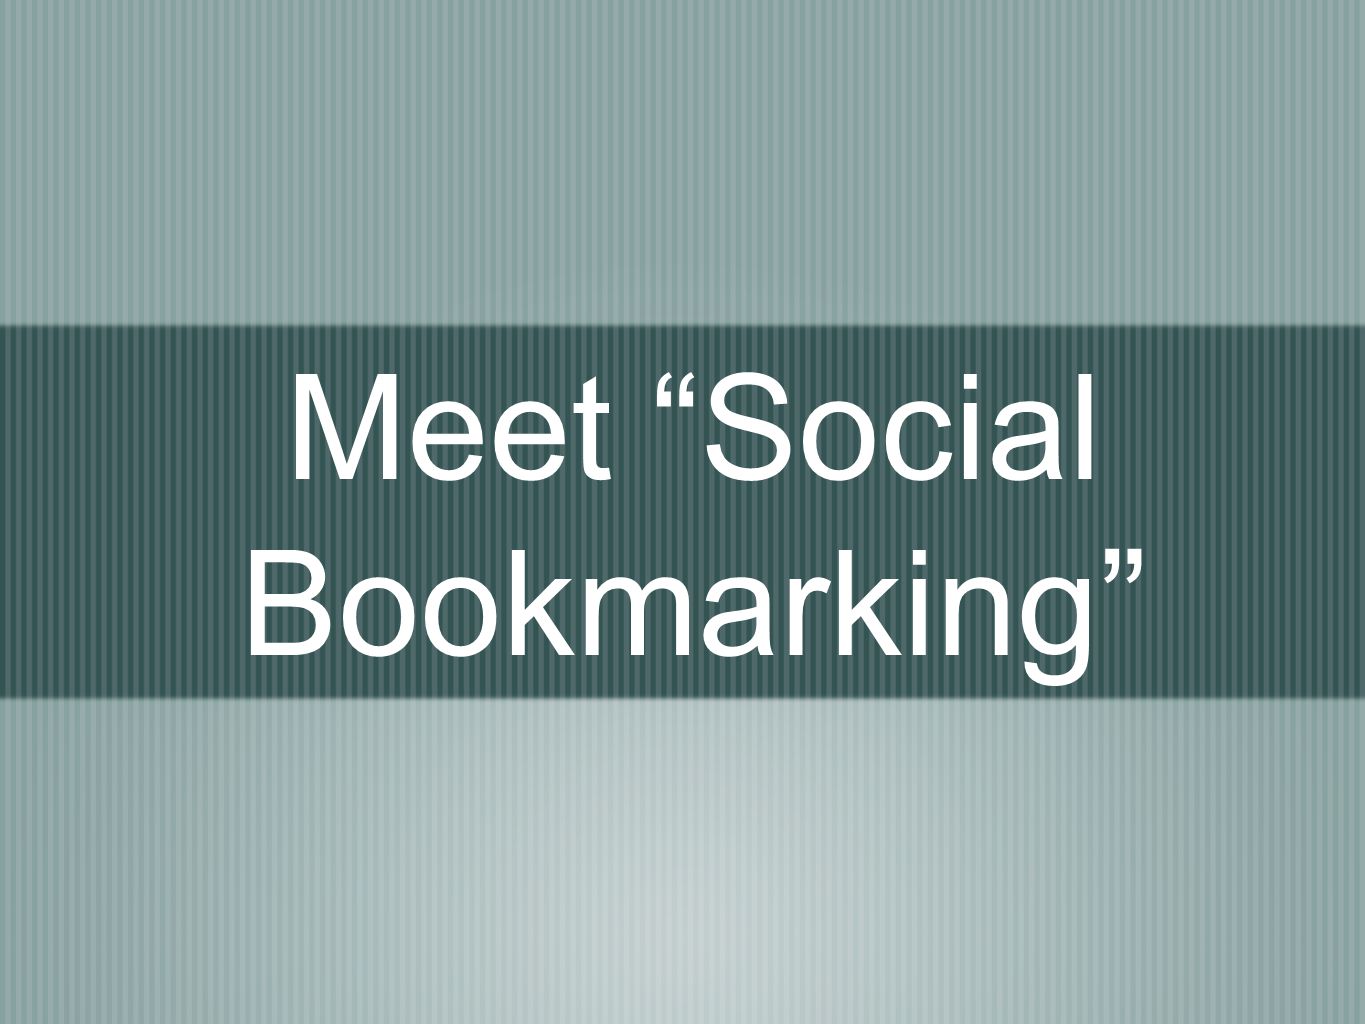 Meet Social Bookmarking